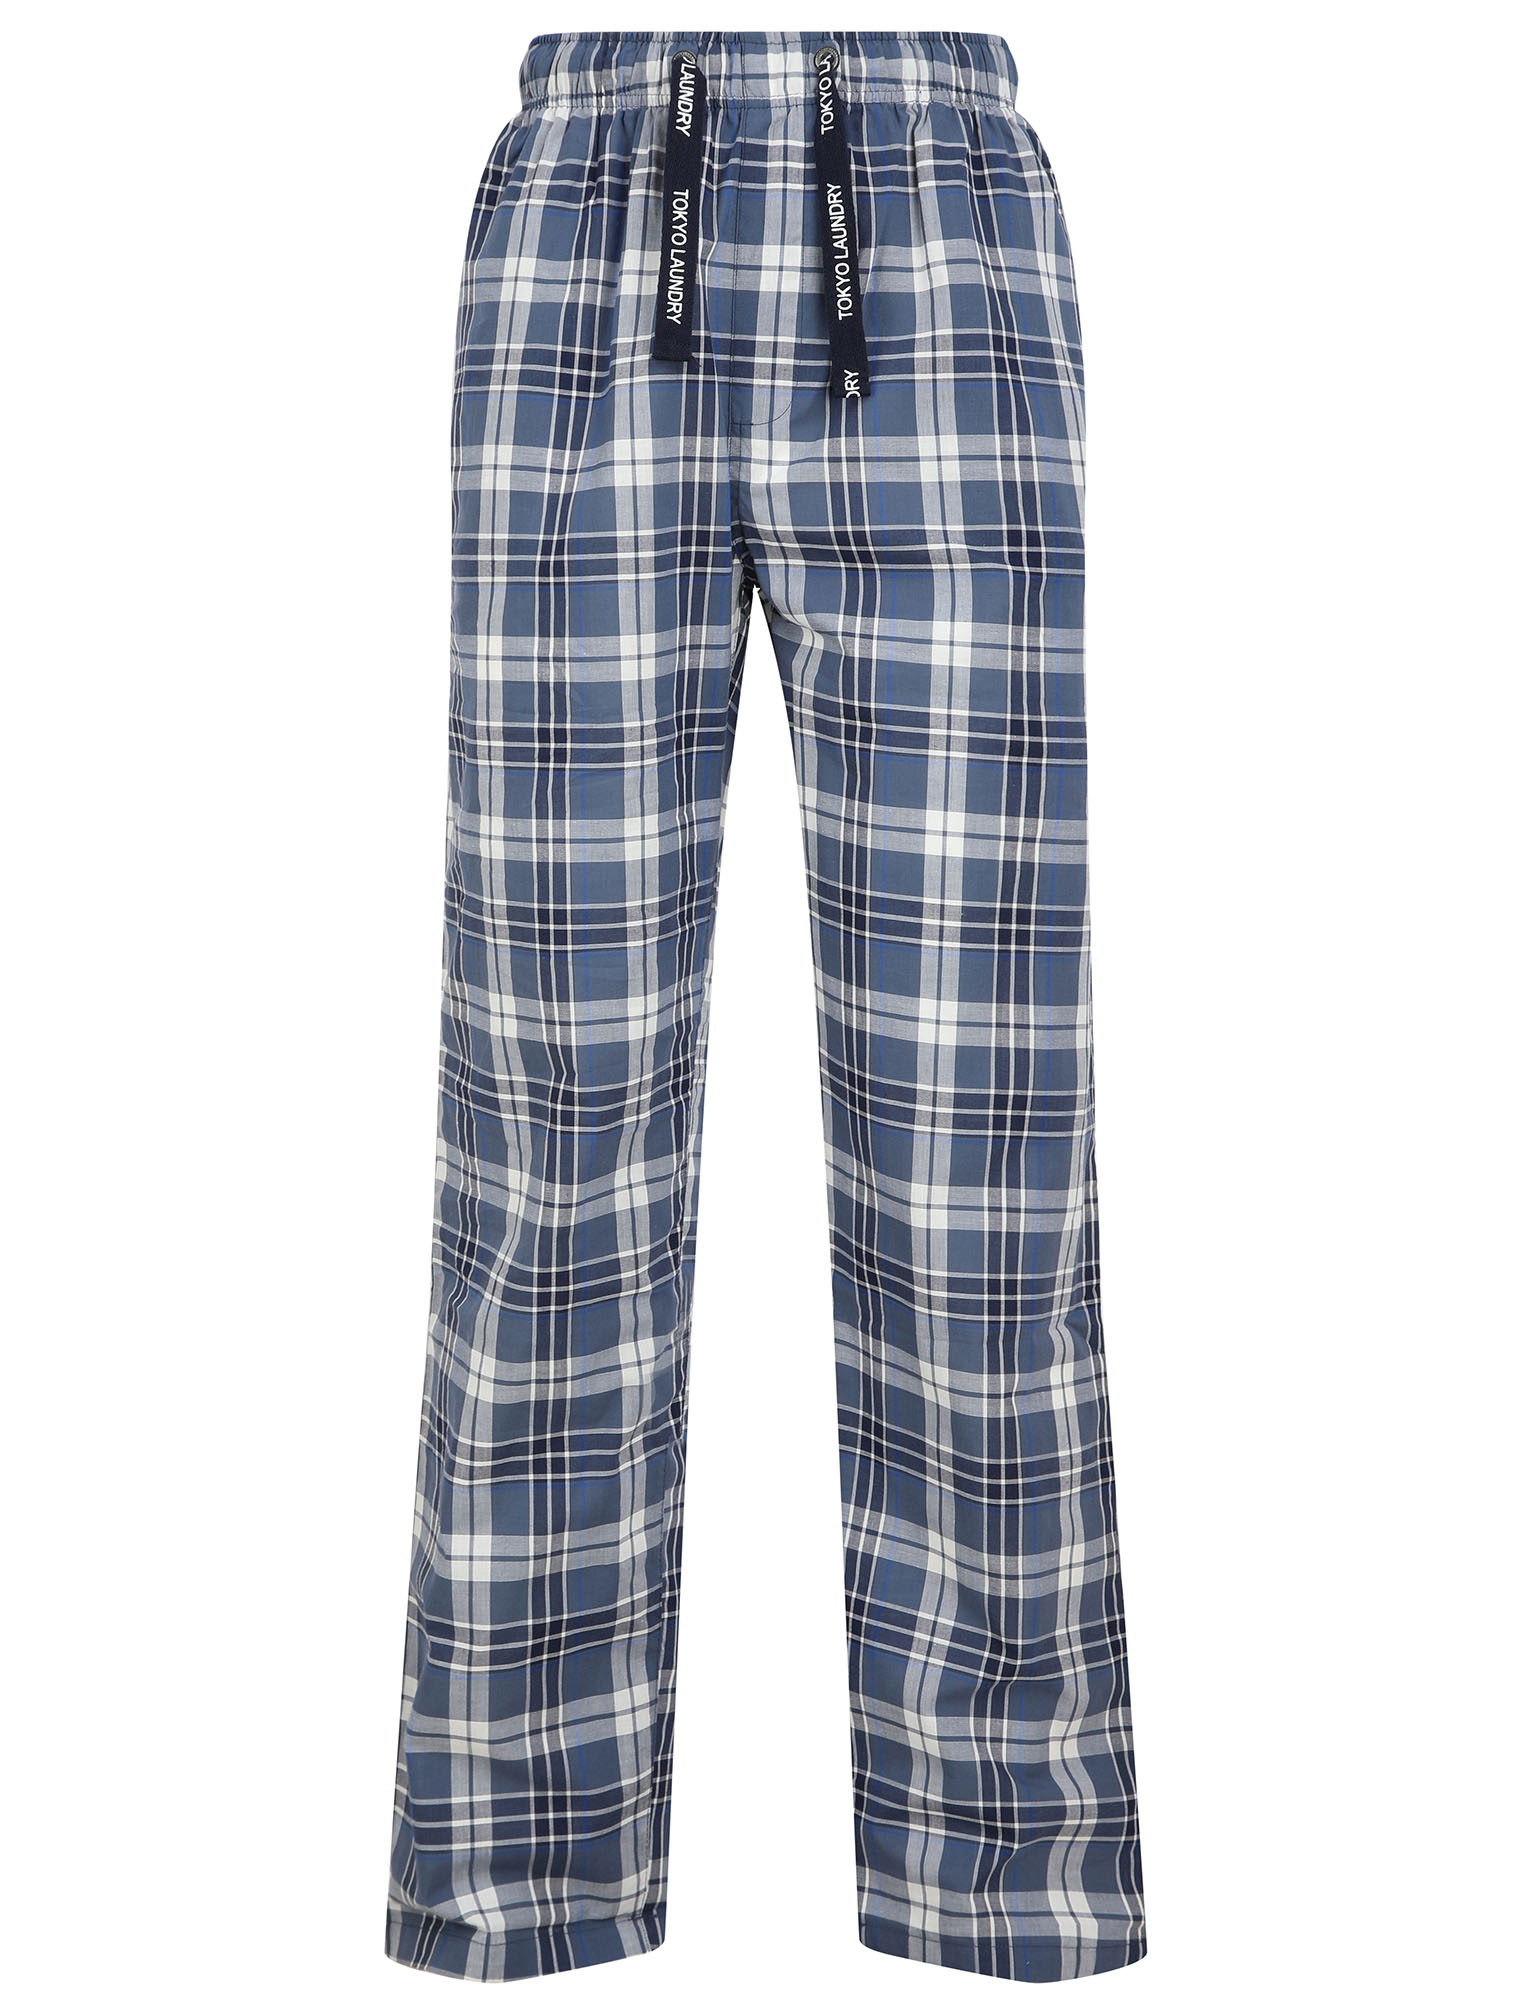 Kirbaez Mens Long Casual Elastic Waist Drawstring Loose Sports Pants Plaid Pajama Trousers 